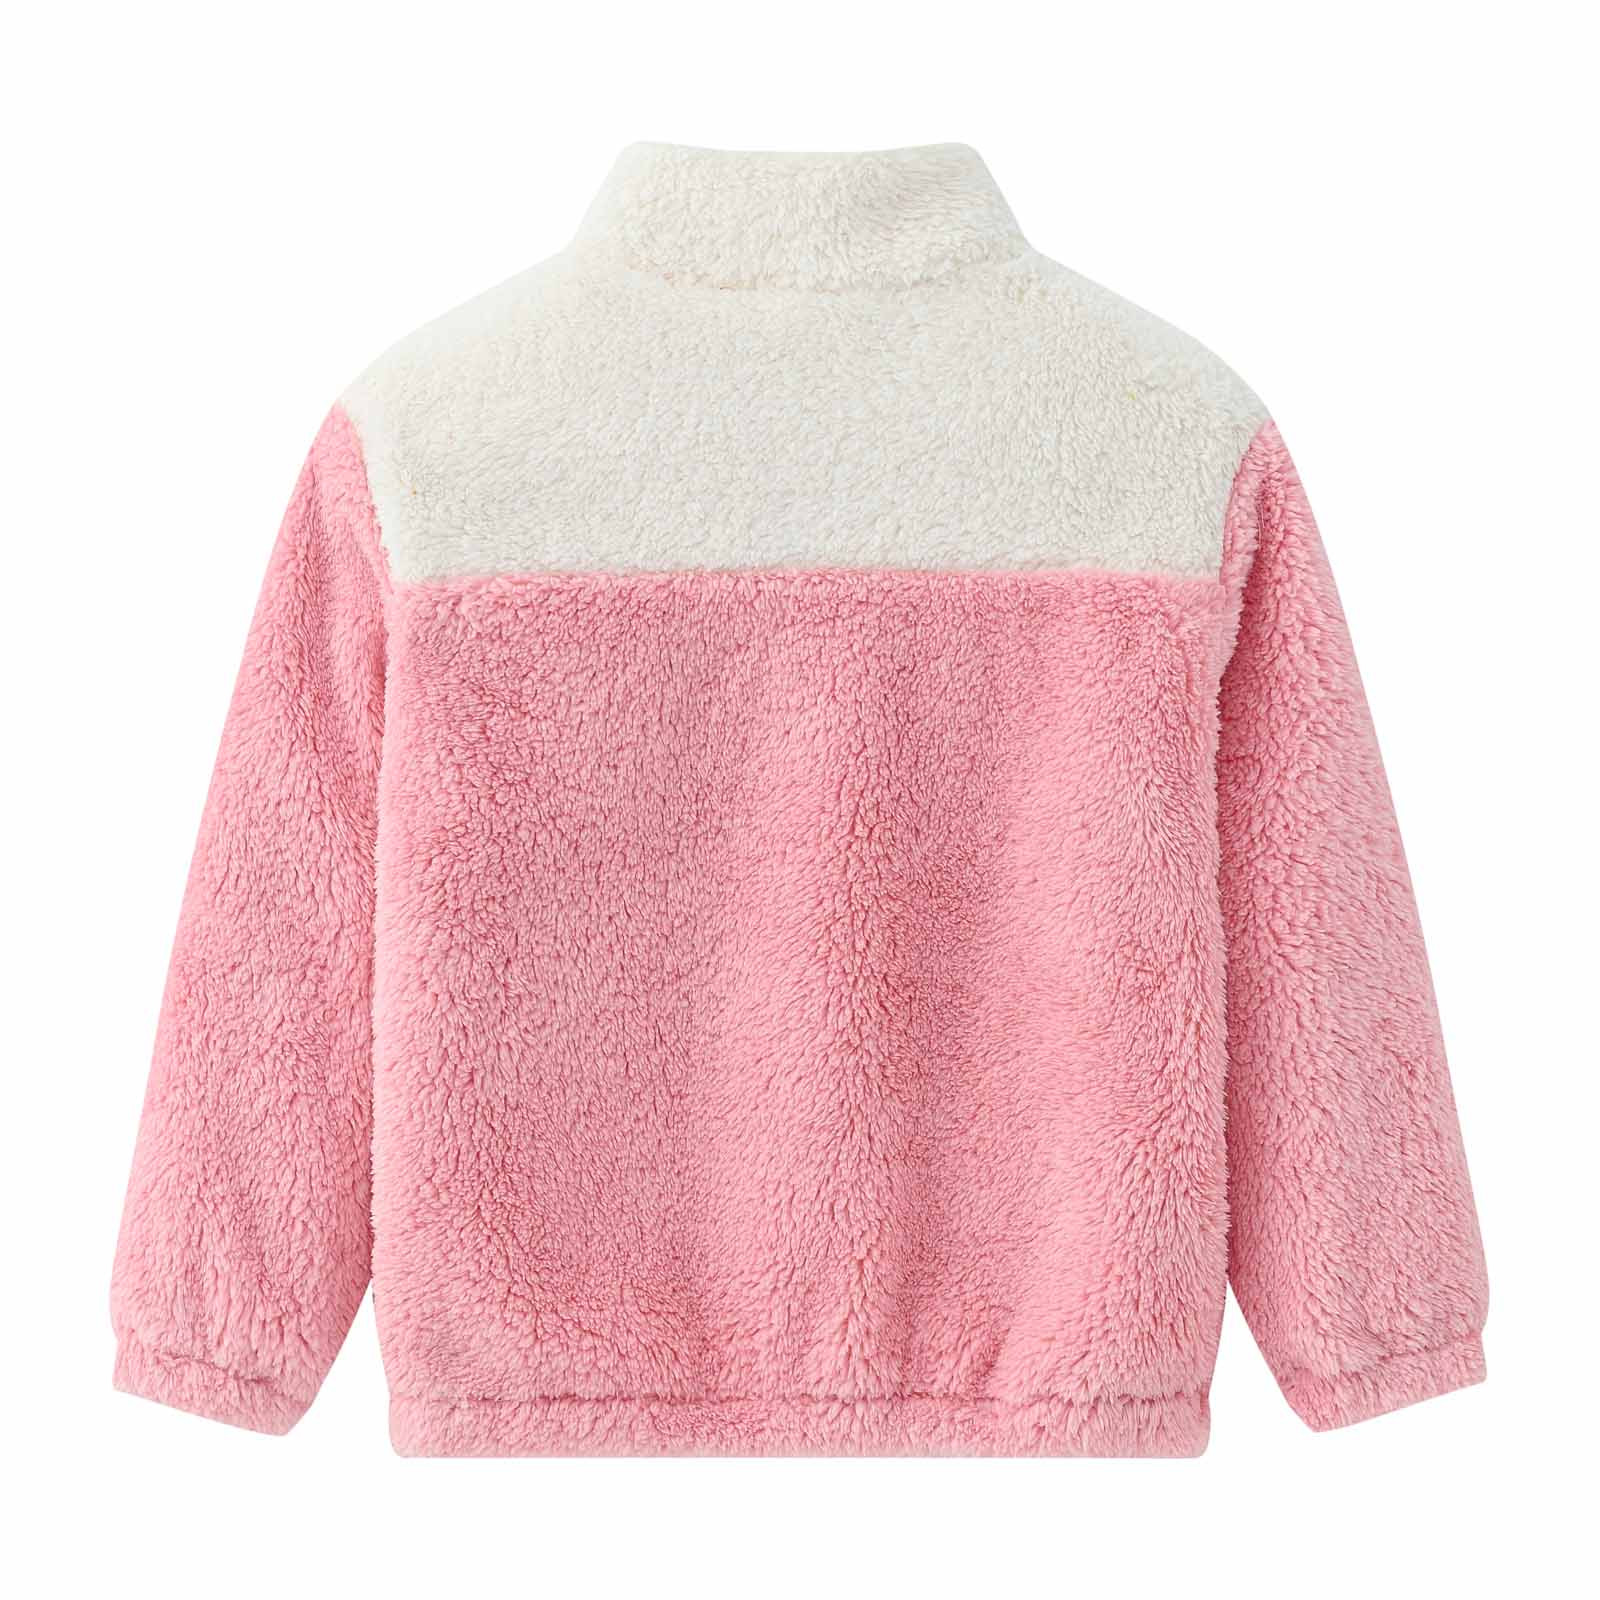 YYDGH Girls Zipper Jacket Fuzzy Sweatshirt Long Sleeve Casual Cozy Fleece Sherpa Outwear Coat Full-Zip Rainbow Jackets(Pink,4-5 Years) - image 5 of 8